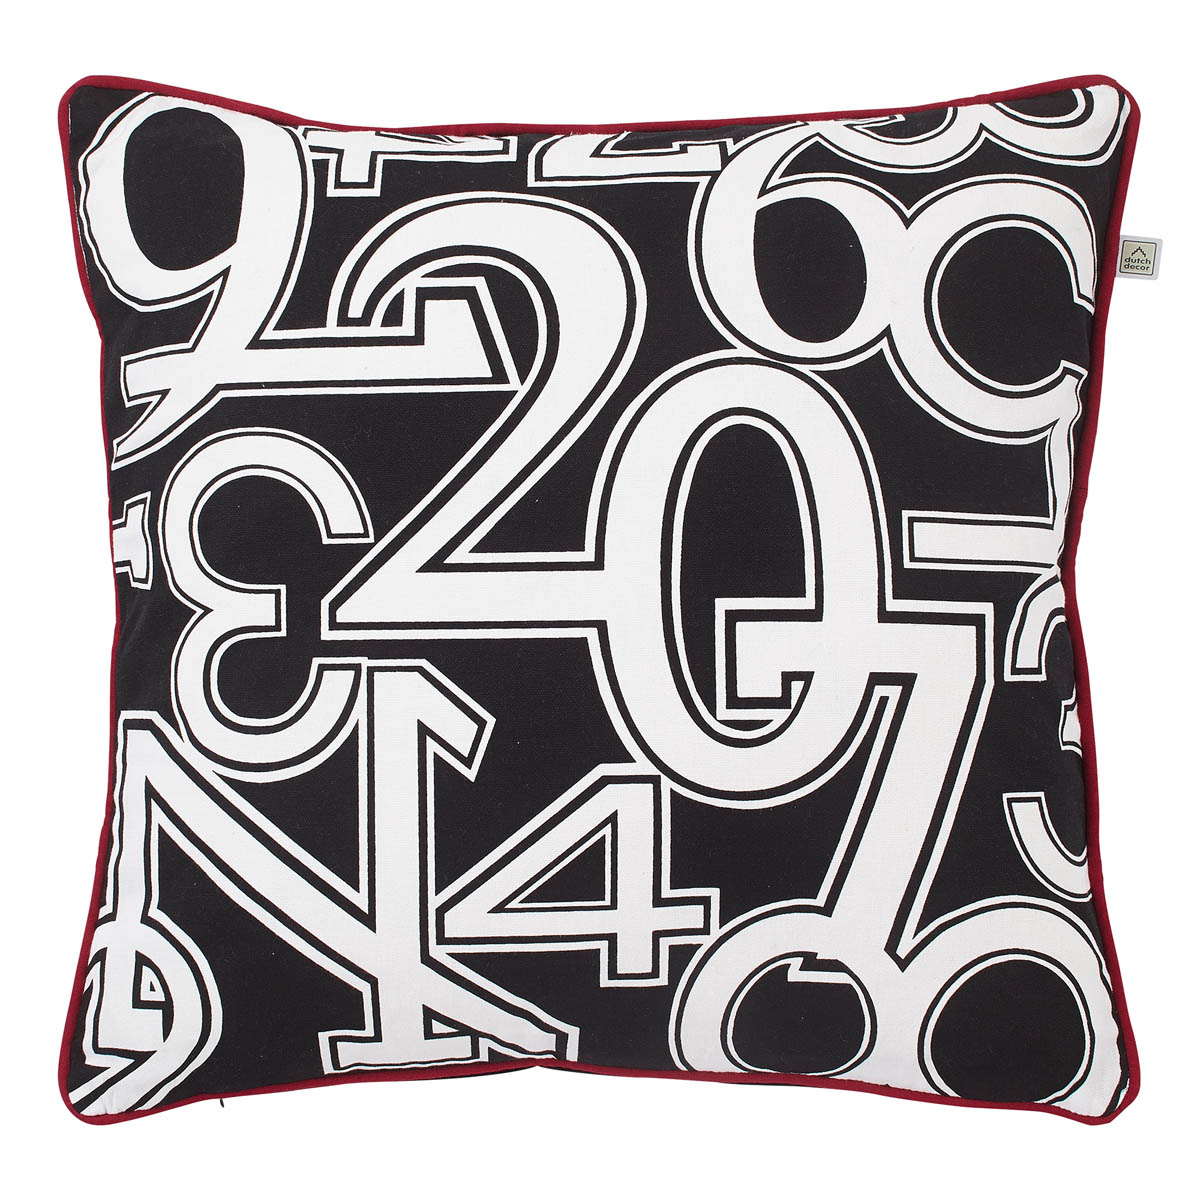 Cushion Numbers 50x50 cm Black